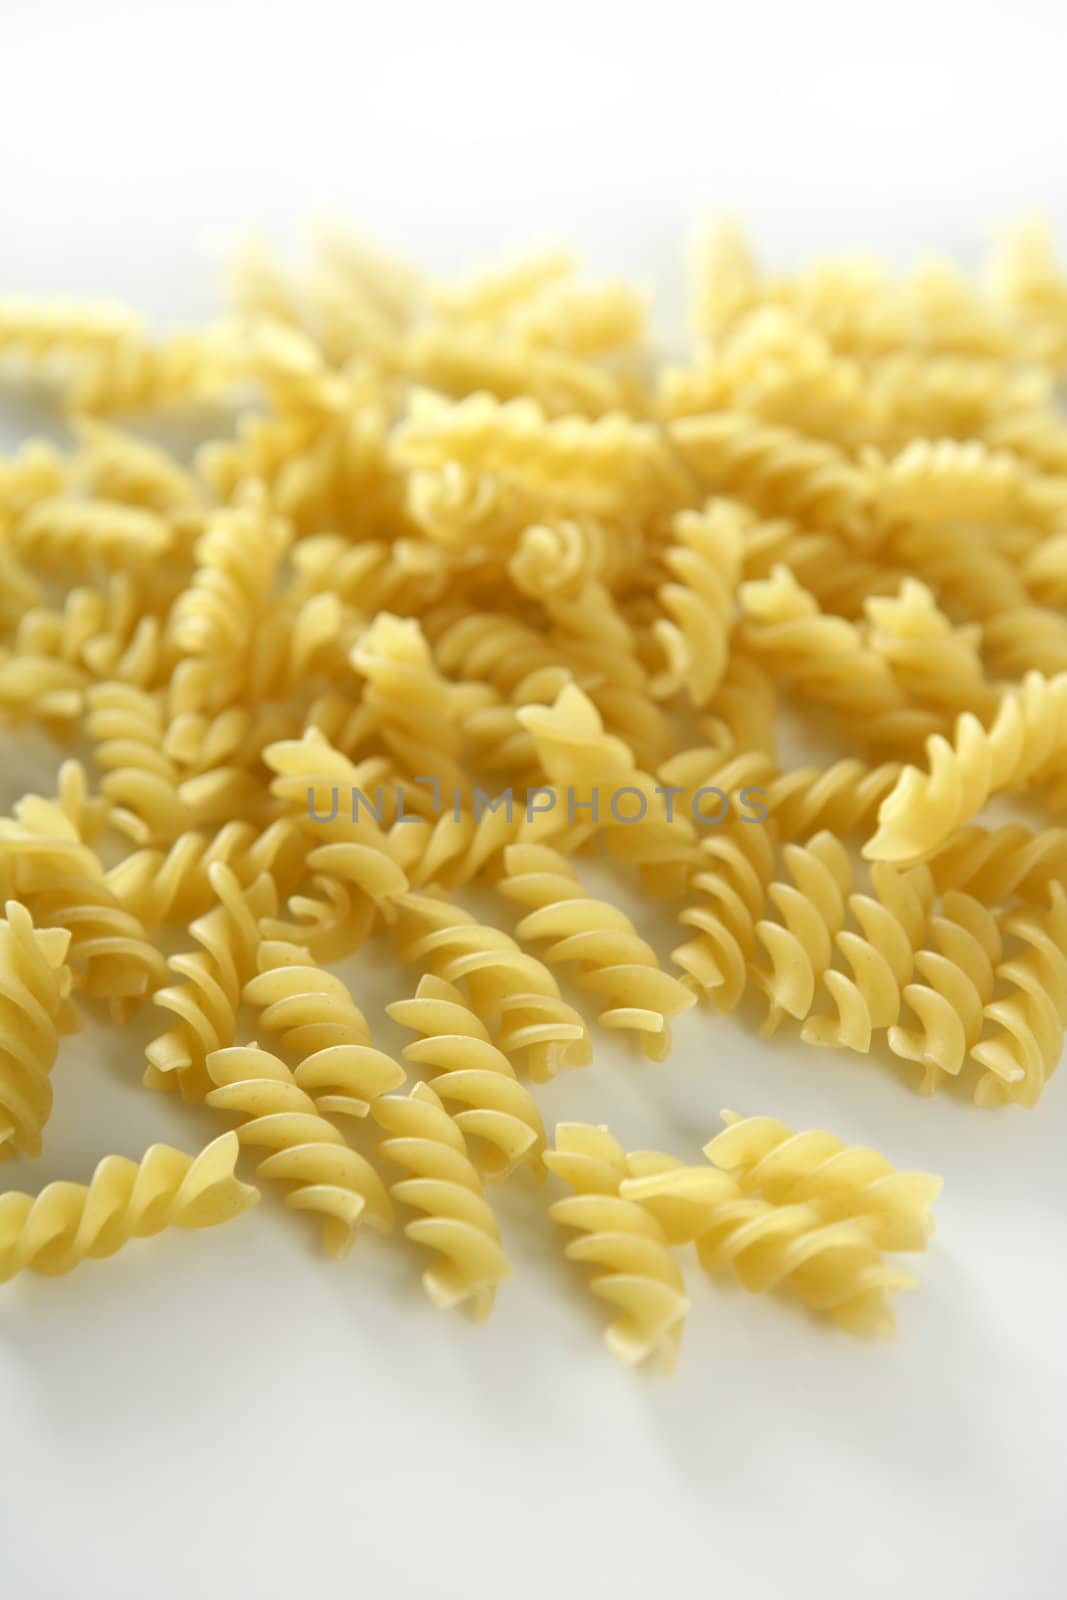 Italian spiral pasta texture by lunamarina